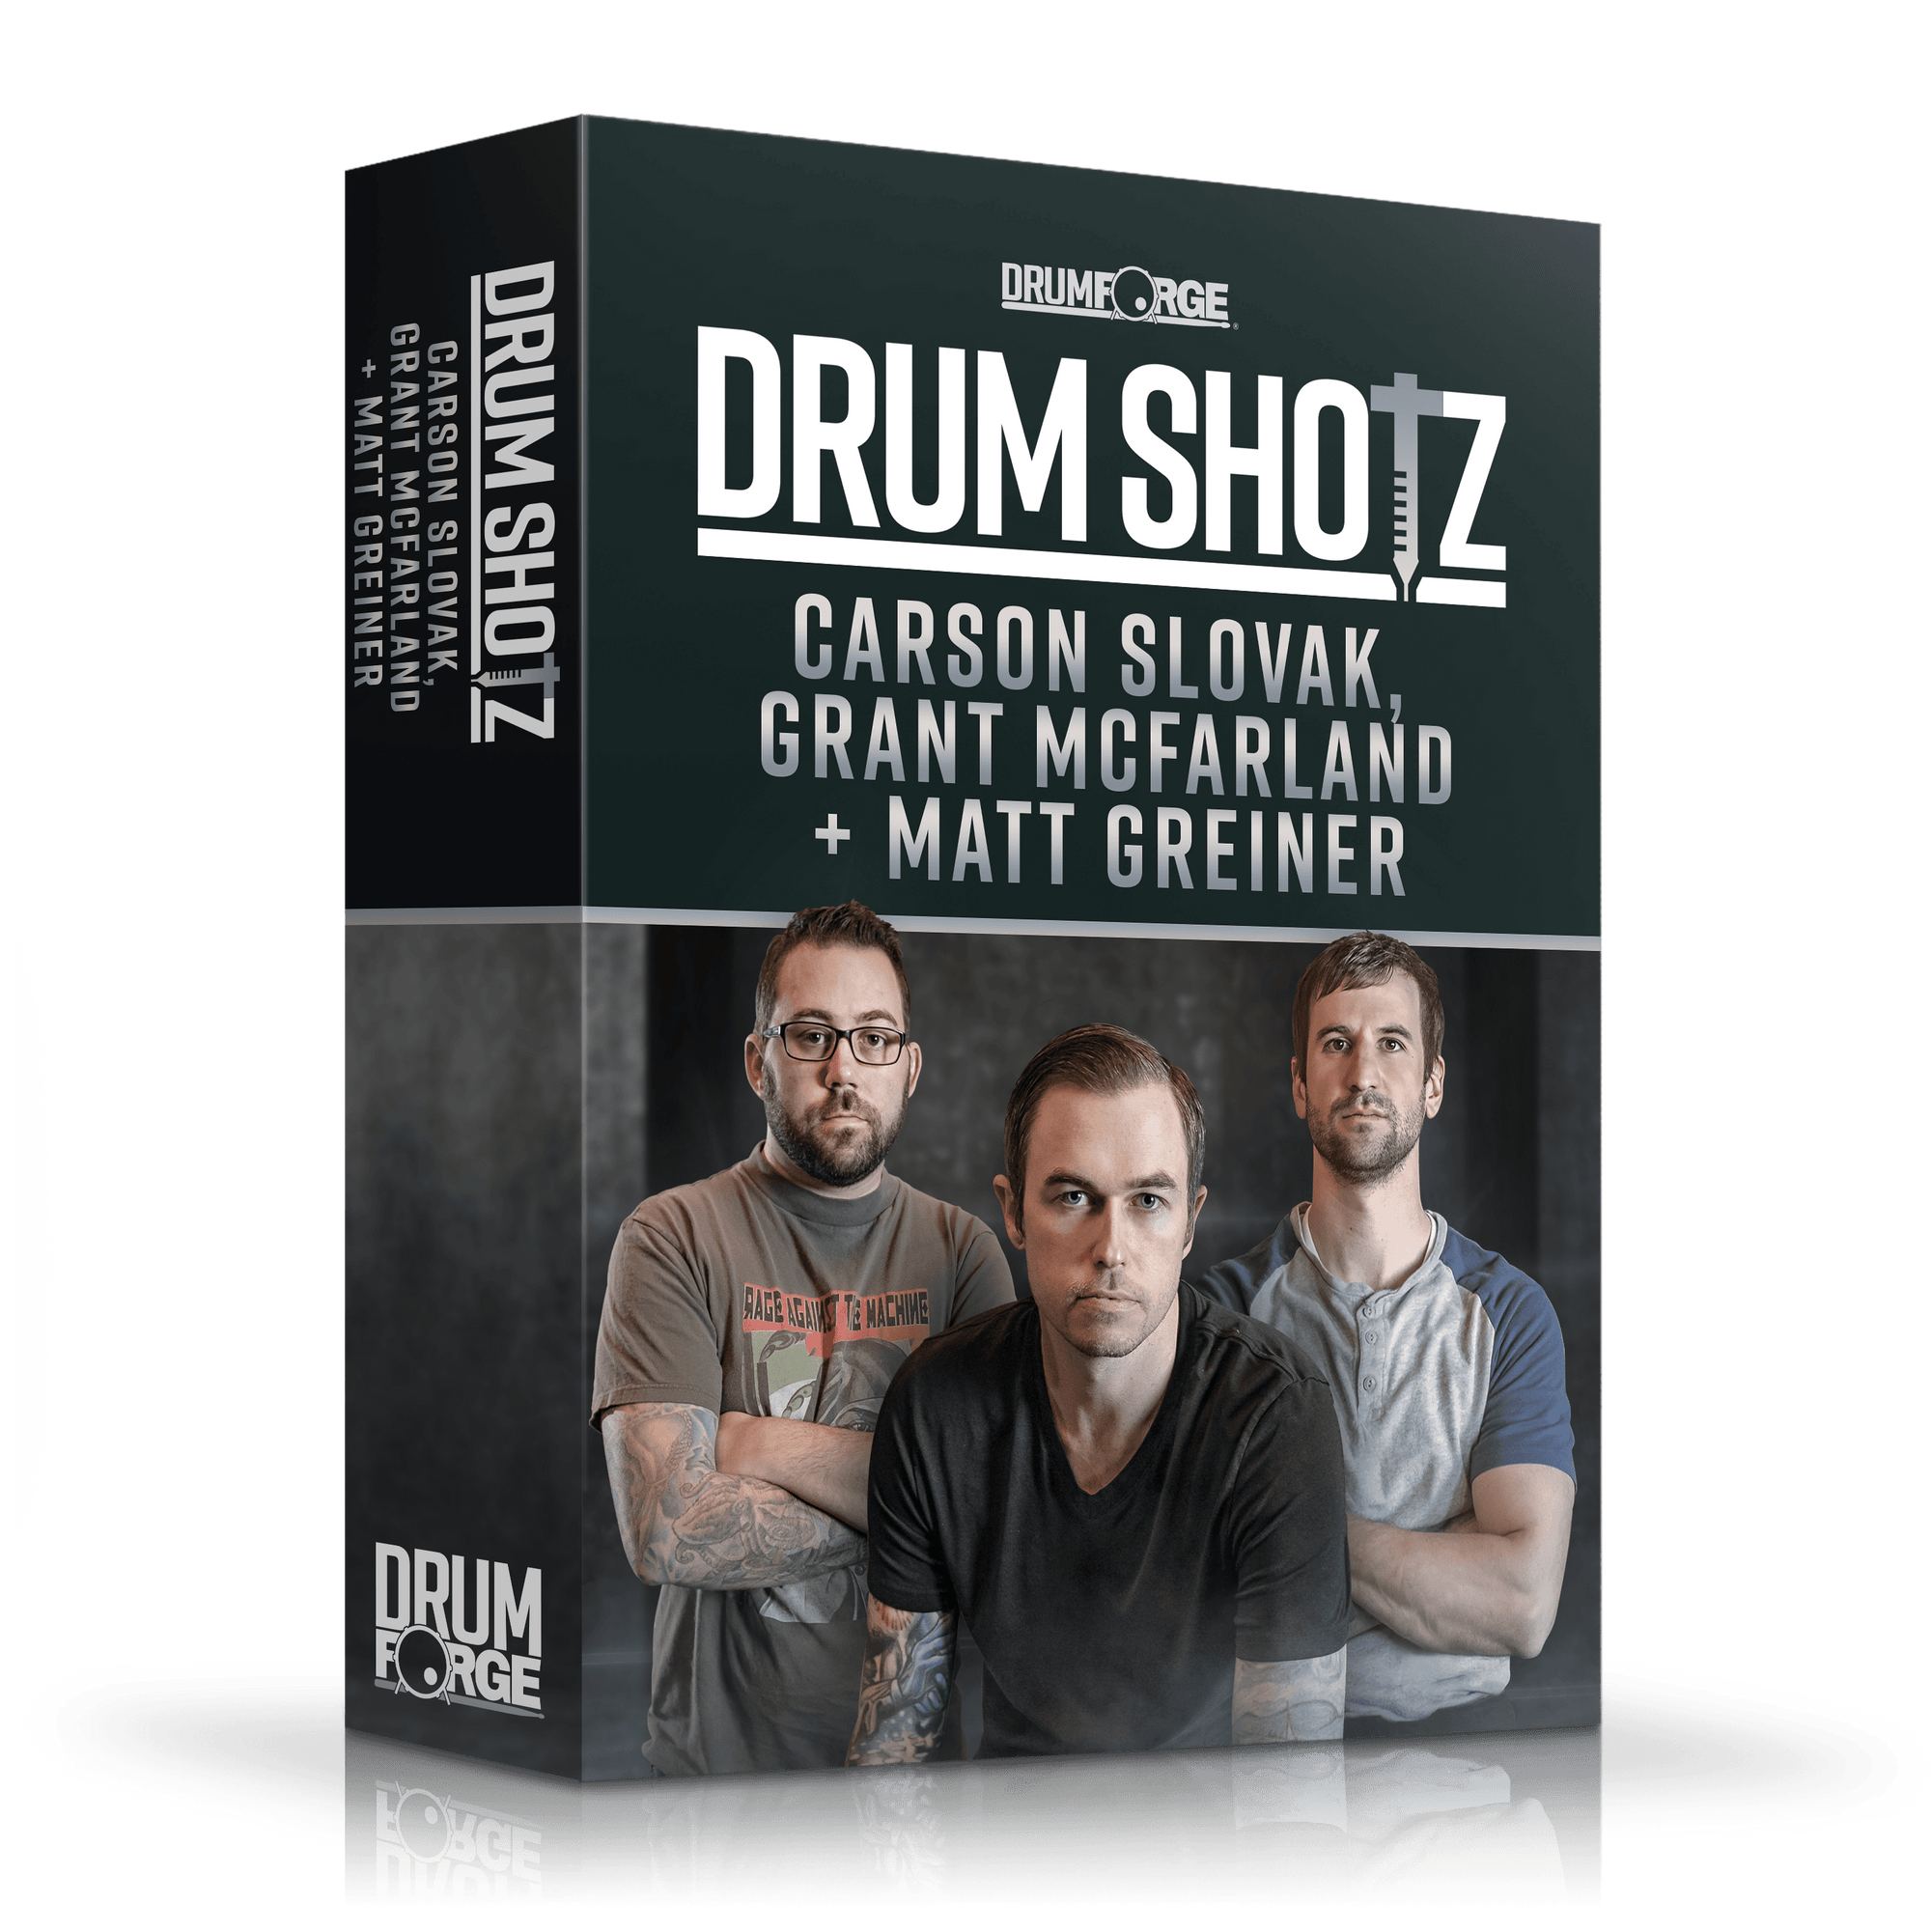 Drumshotz Carson Slovak & Grant McFarland & Matt Greiner